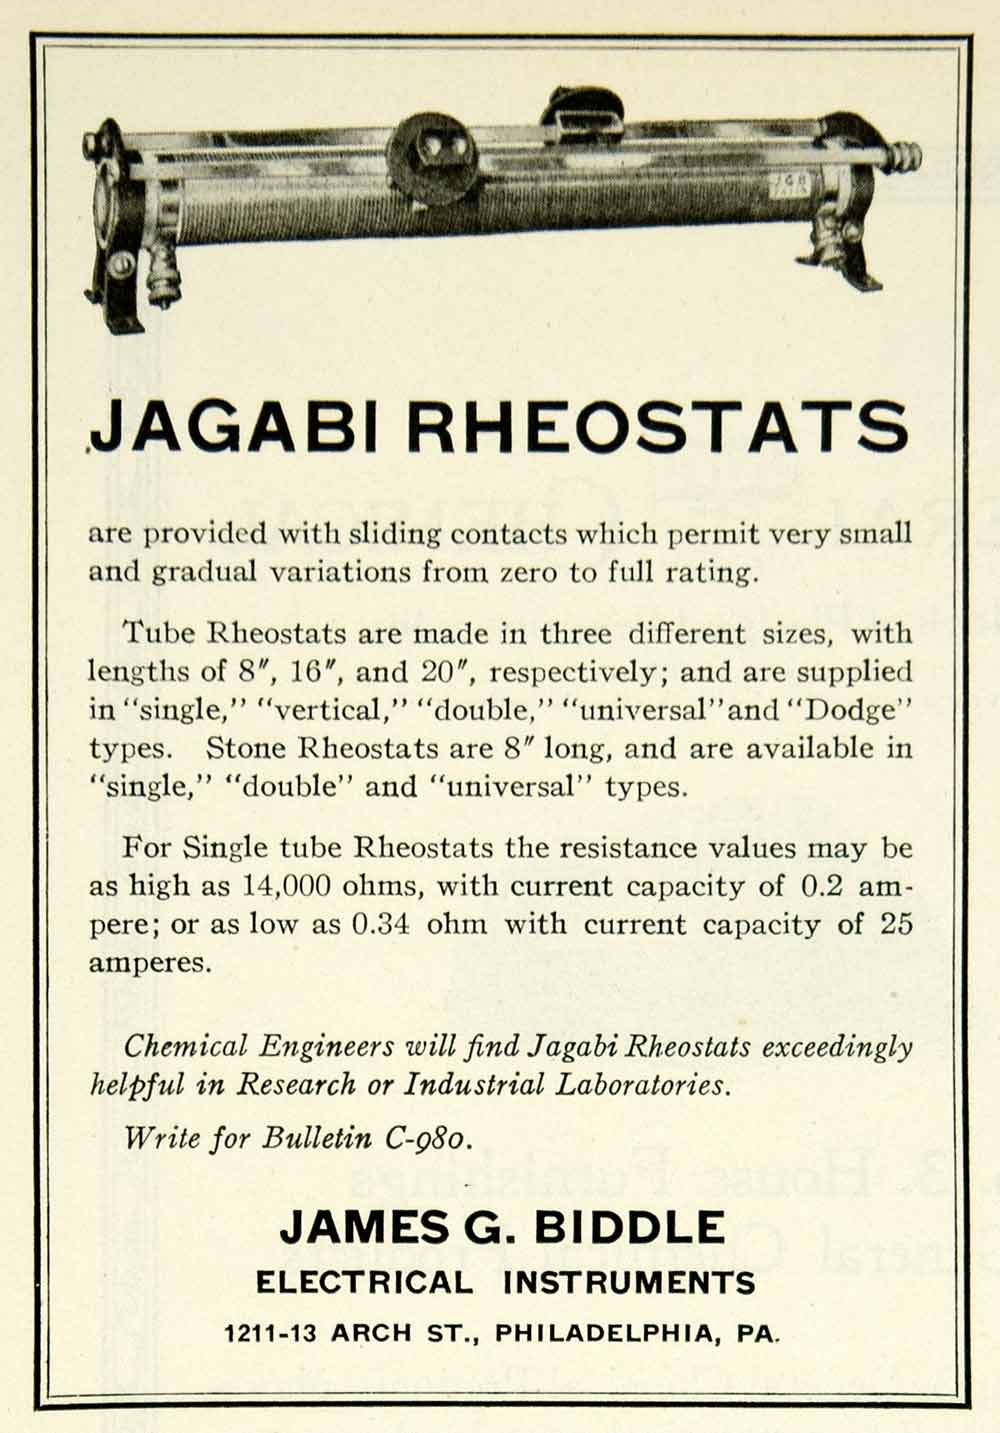 1922 Ad James G Biddle Electrical Instruments Jagabi Tube Rheostats Science IEC2